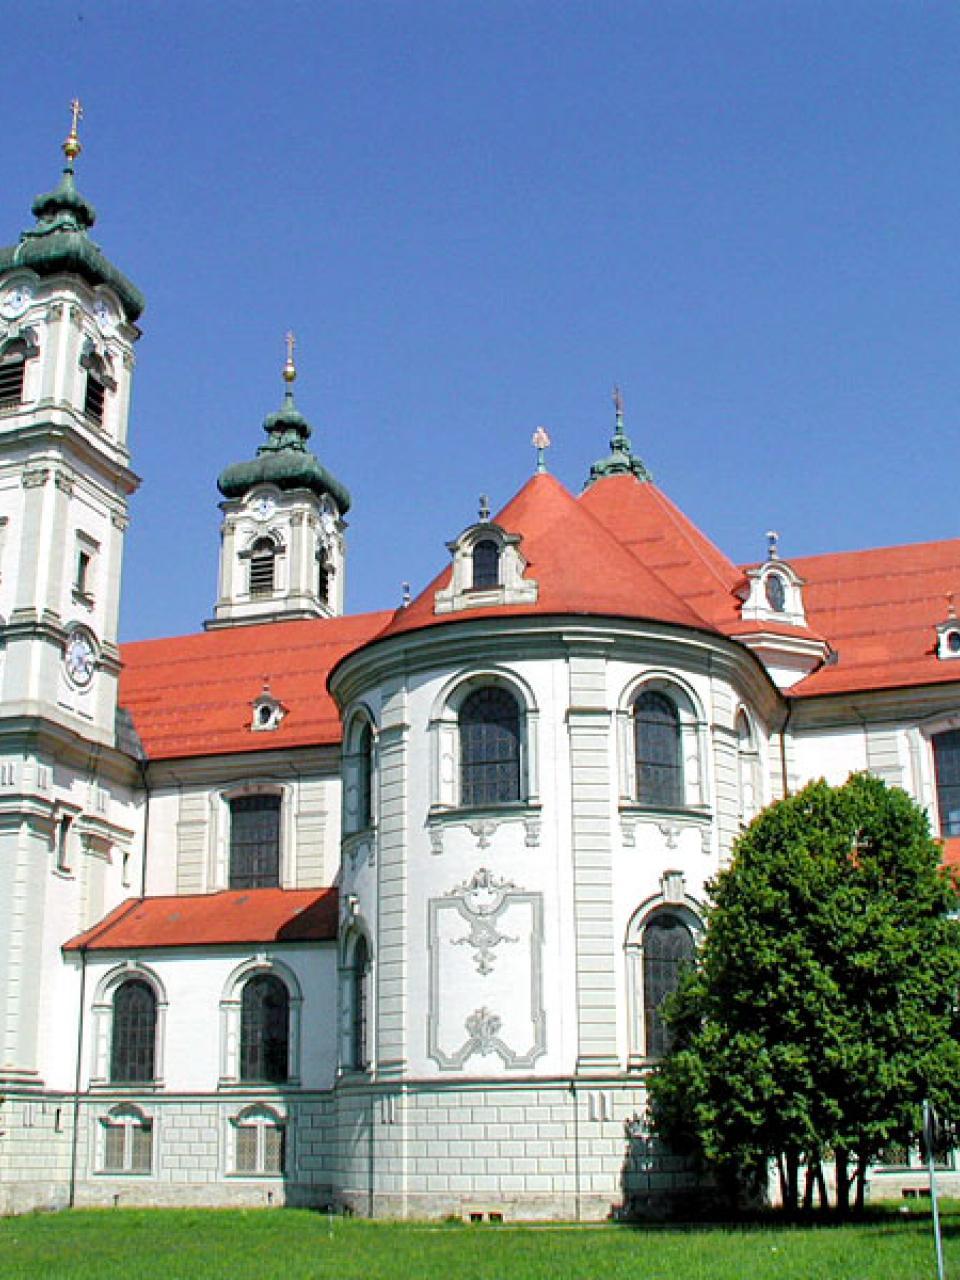 Benediktinerabtei Ottobeuren im Allgäu